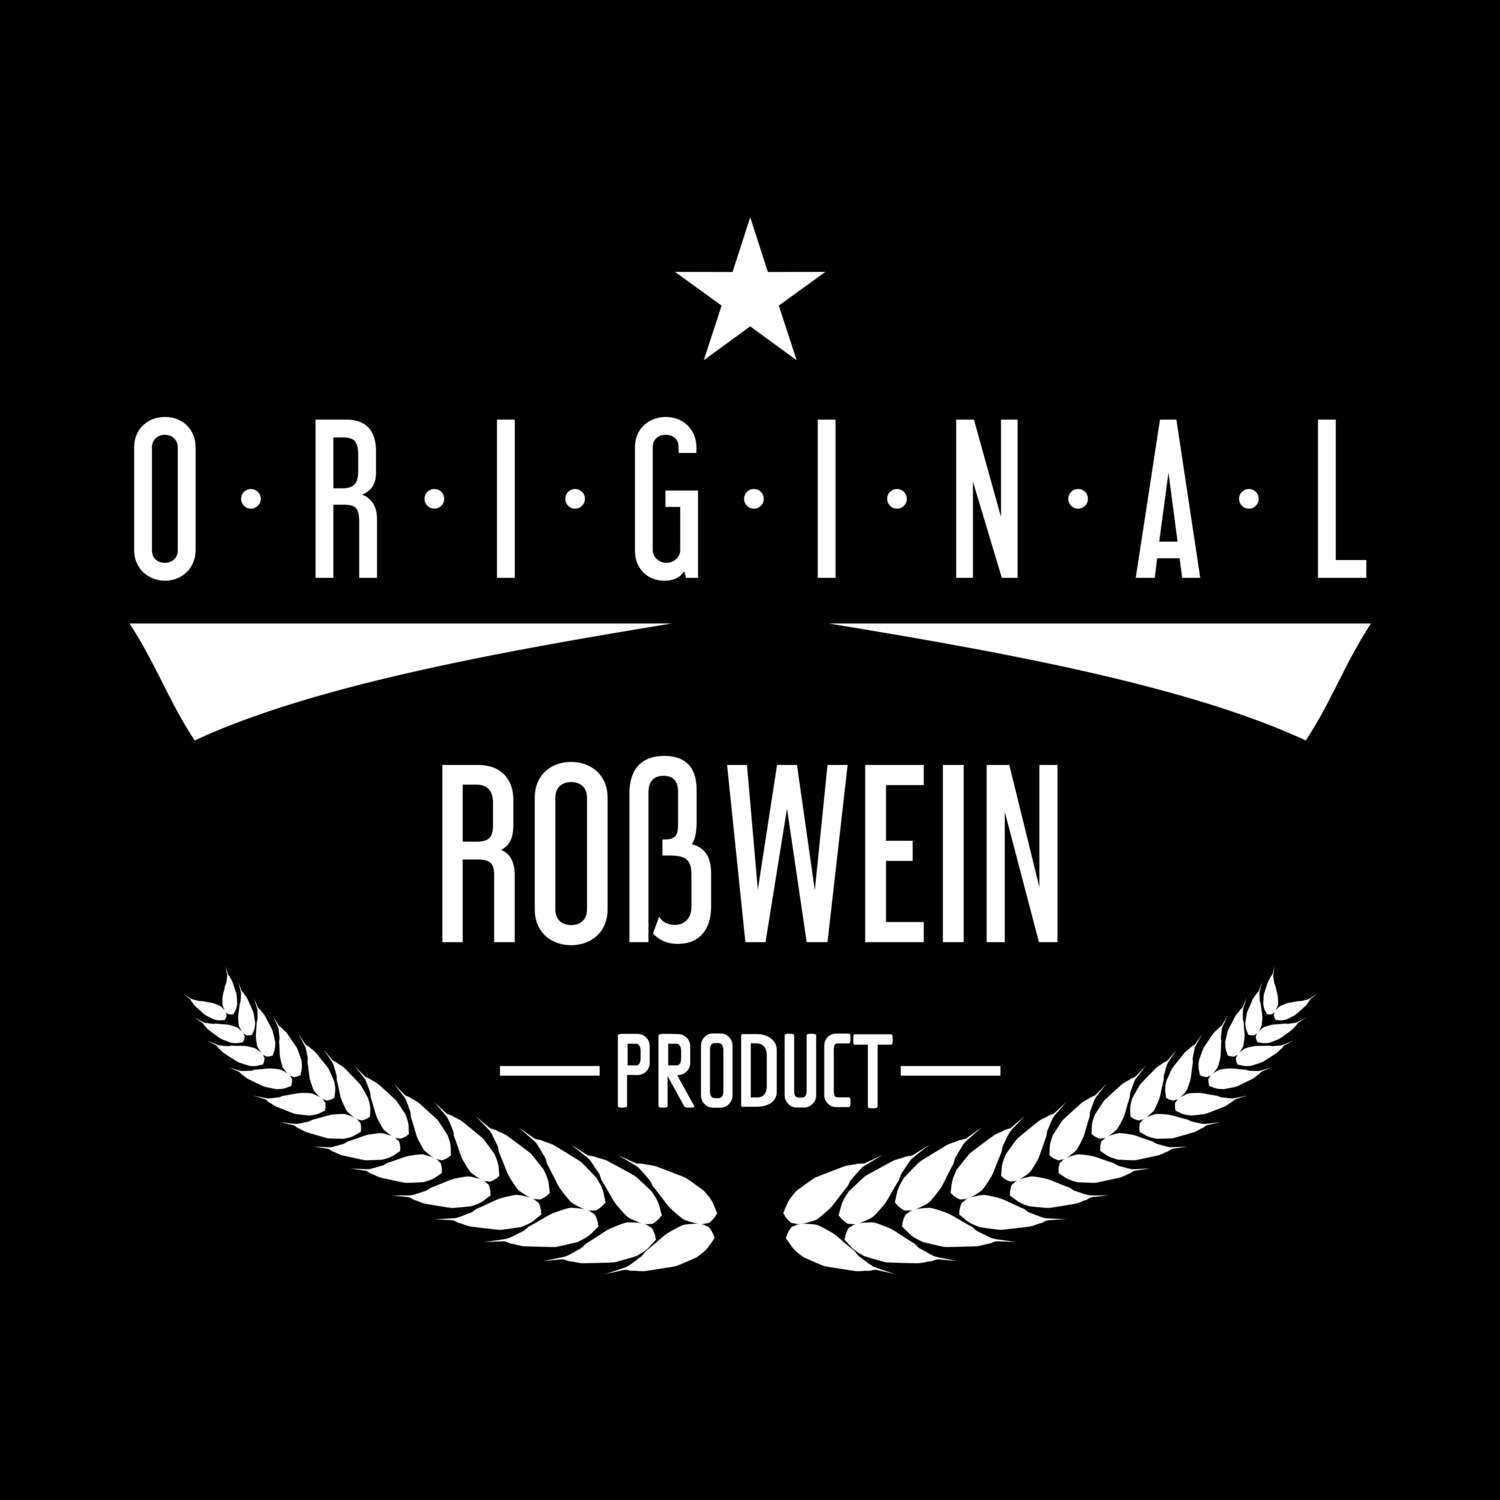 Roßwein T-Shirt »Original Product«